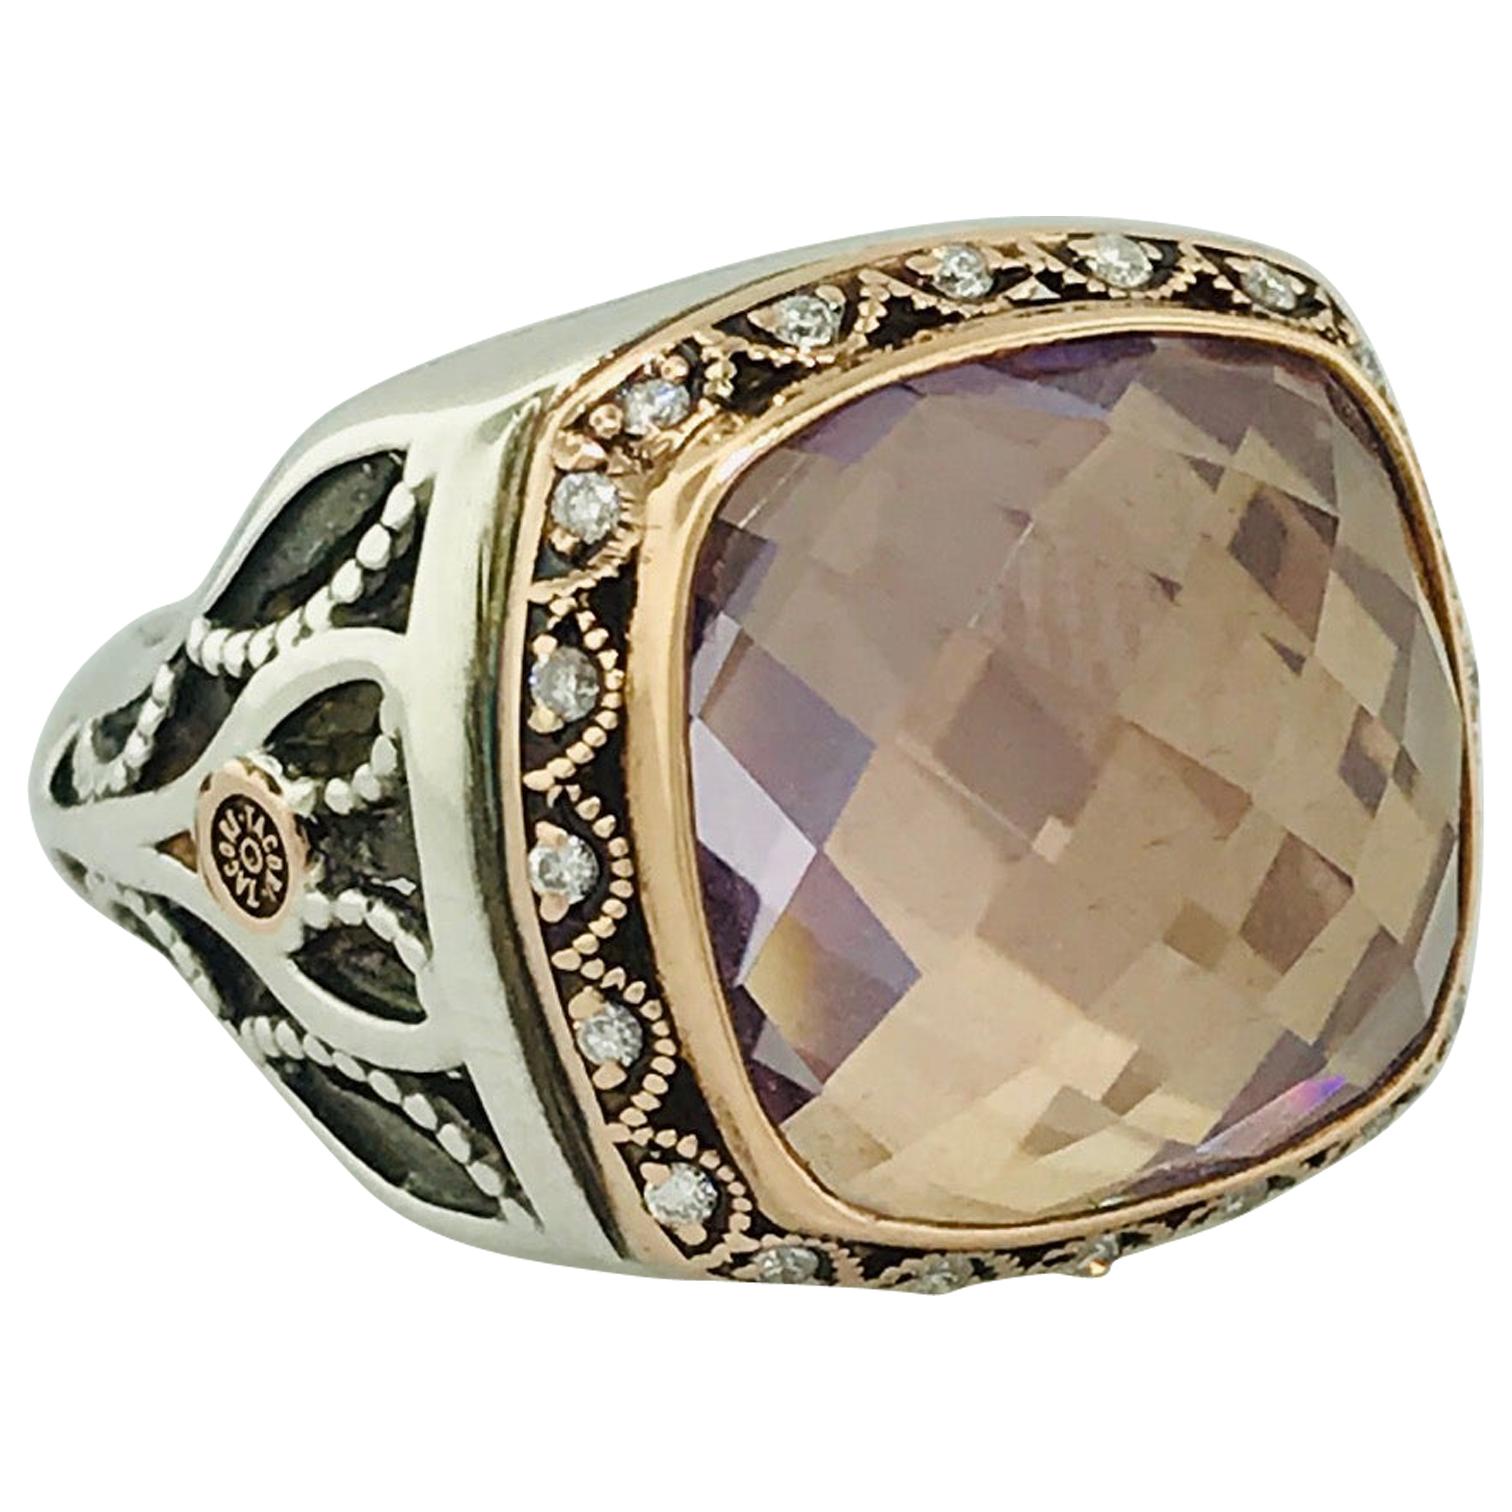 Tacori Rose de France Amethyst-Ring aus 18 Karat Gold und Sterlingsilber SR104P13 im Angebot